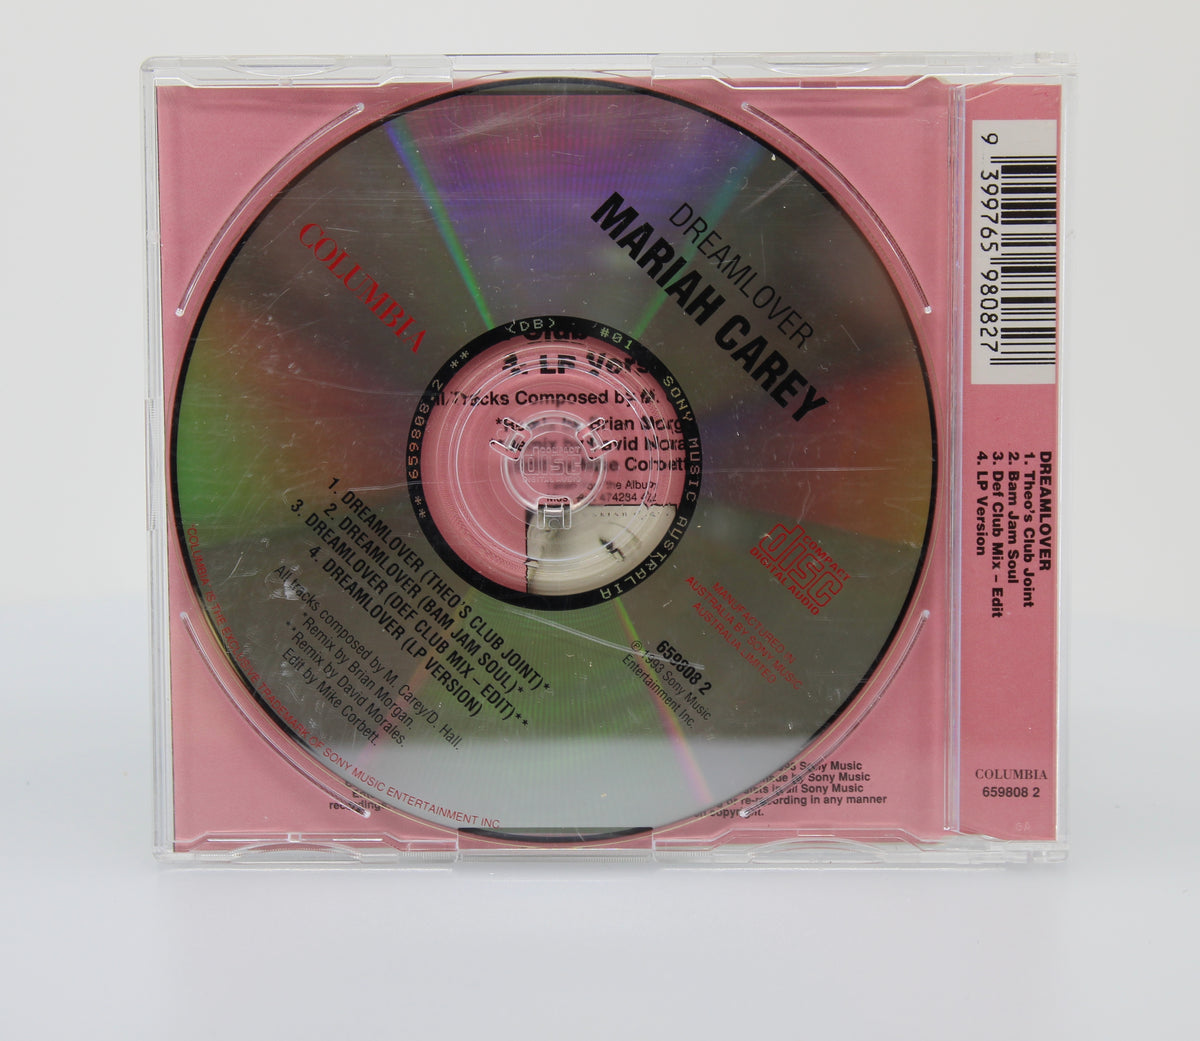 Mariah Carey, Dreamlover, CD Maxi Single, Australia 1993 (CD 656)